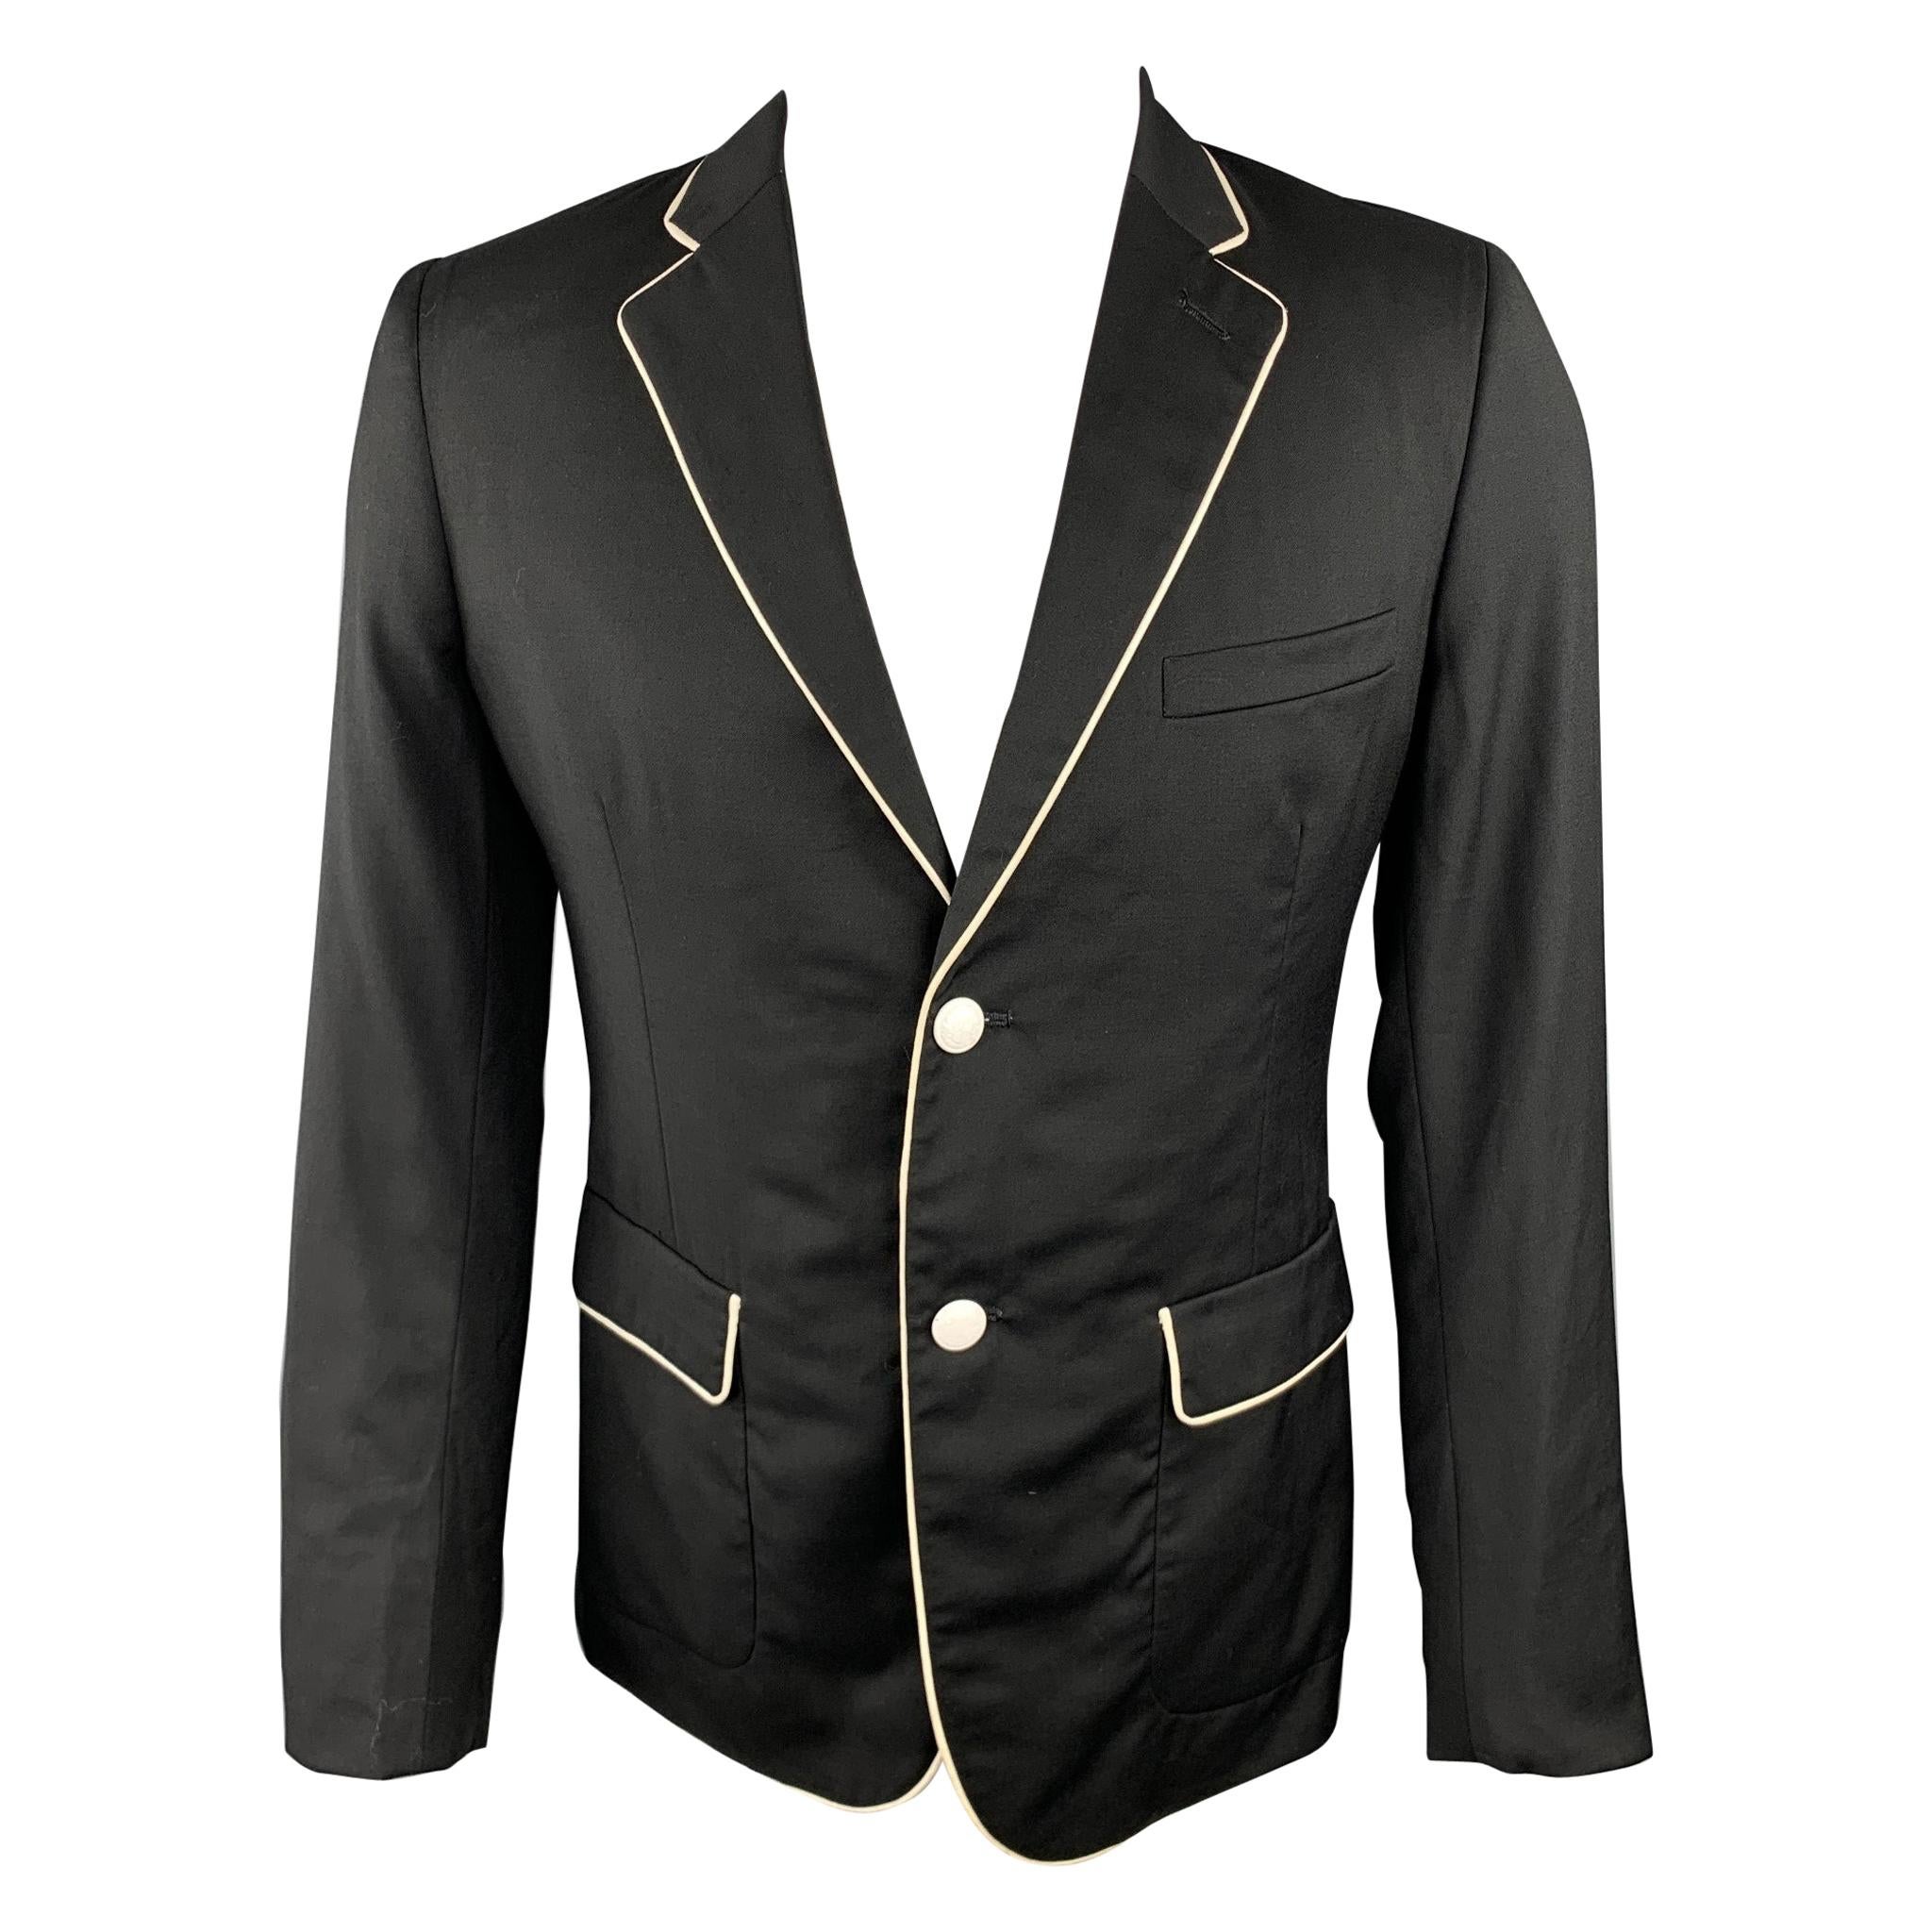 BAND OF OUTSIDERS Size 38 Black Wool Notch Lapel Sport Coat / Jacket